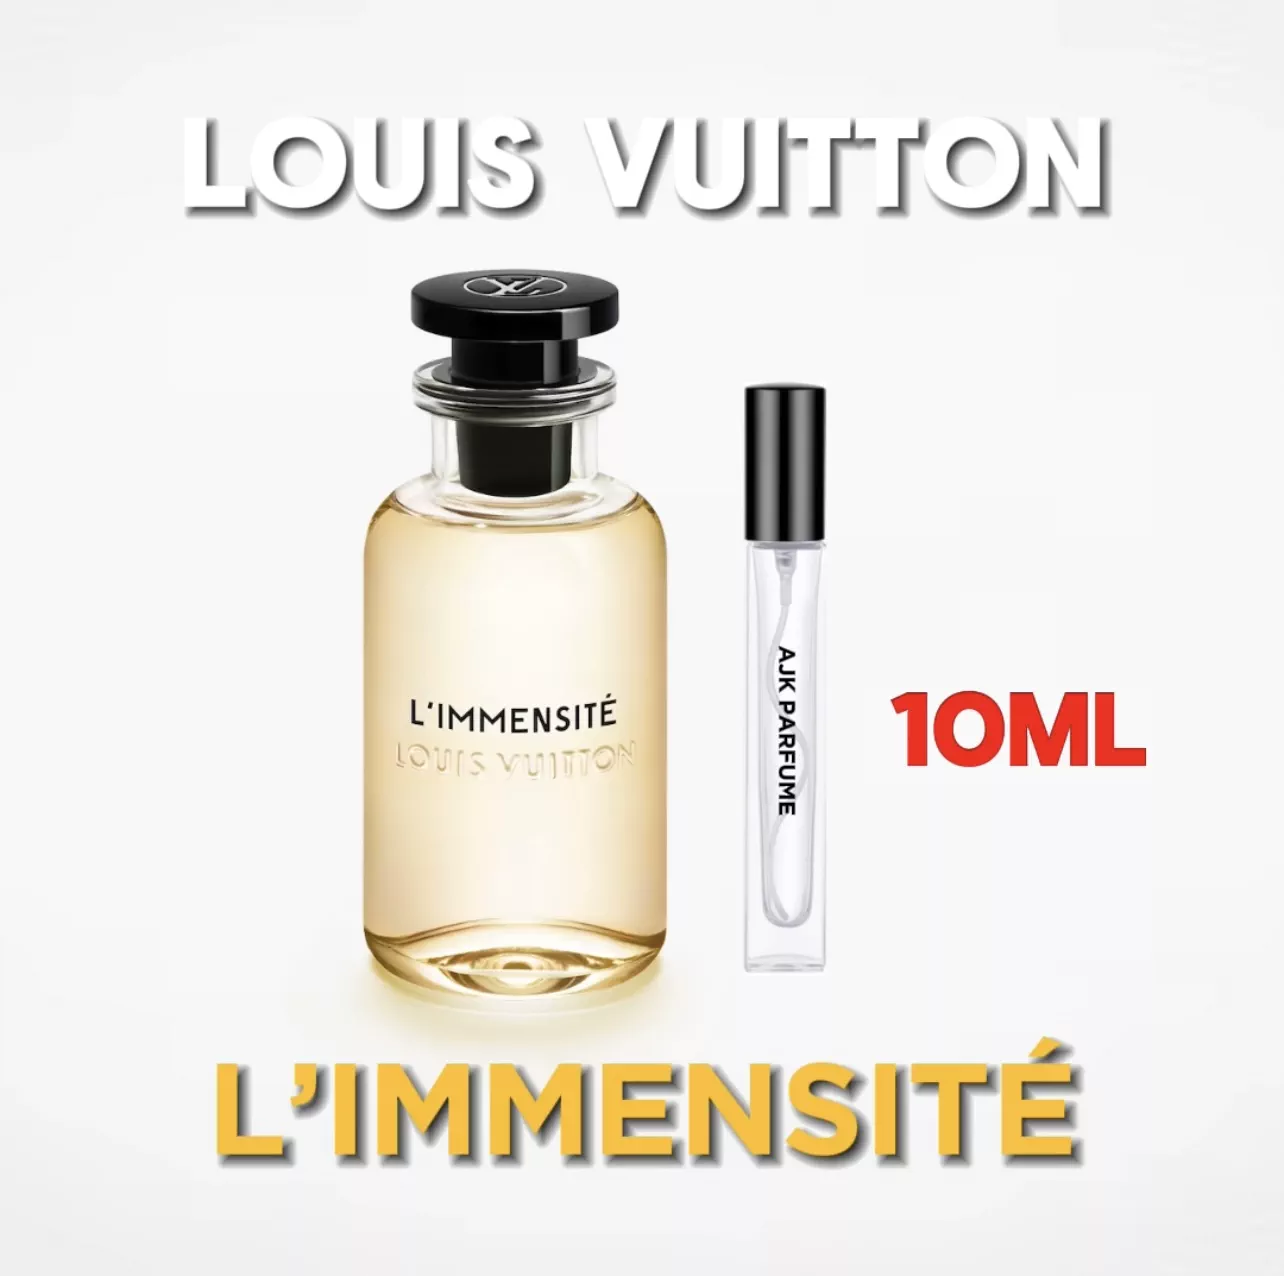 'LOUIS VUITTON L’IMMENSITÉ 10ml' rasmi